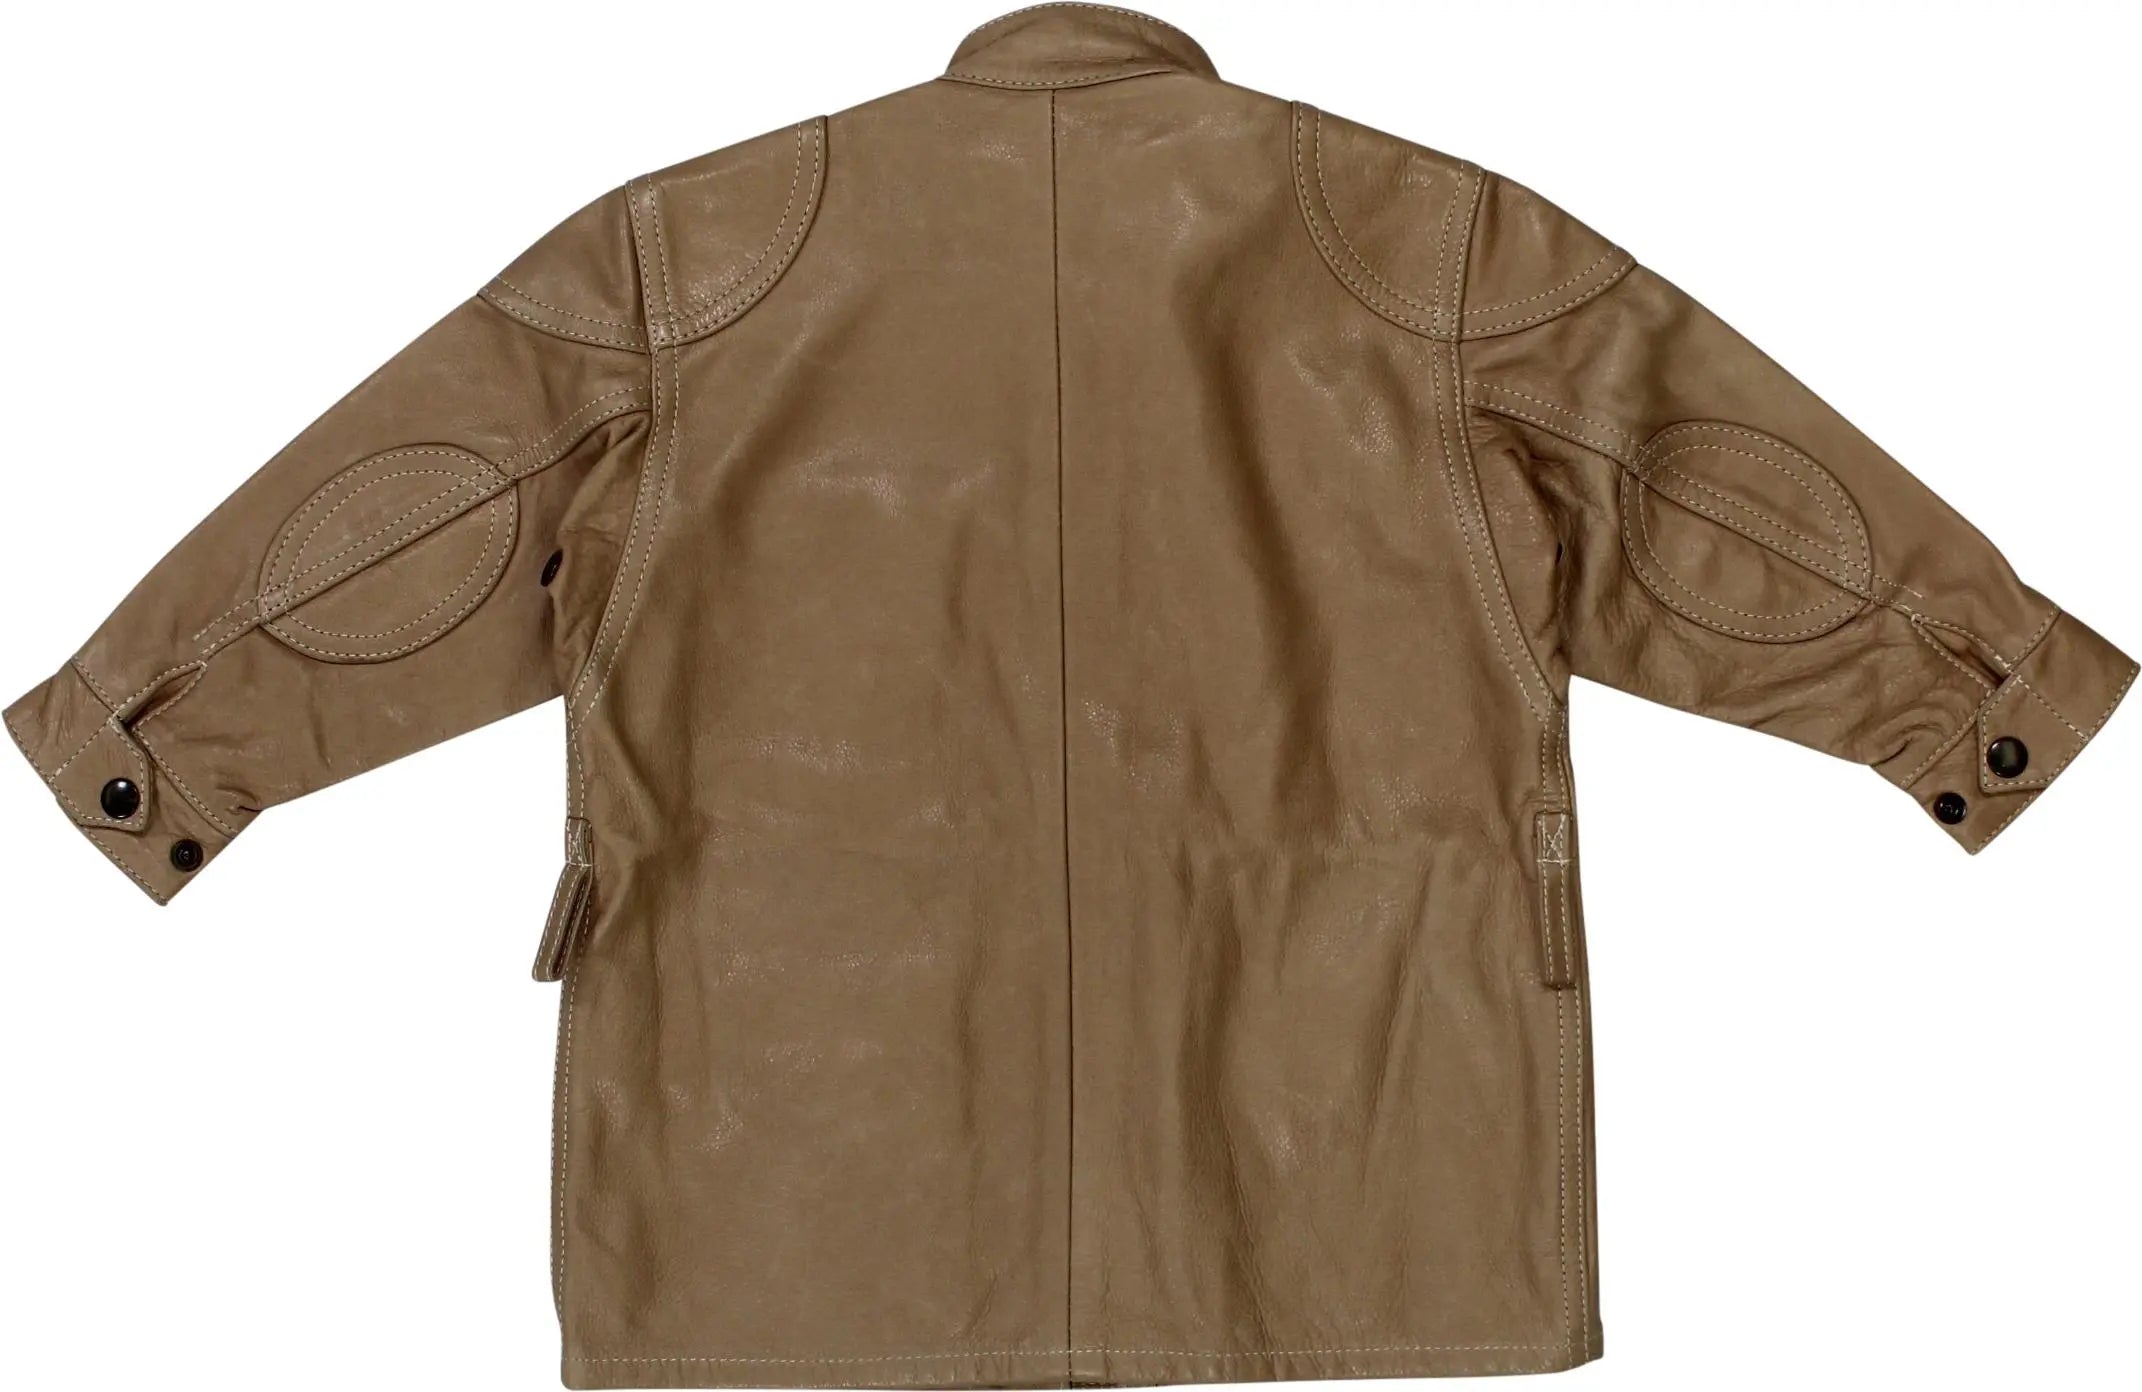 Belstaff - Beige Leather Jacket by Belstaff- ThriftTale.com - Vintage and second handclothing